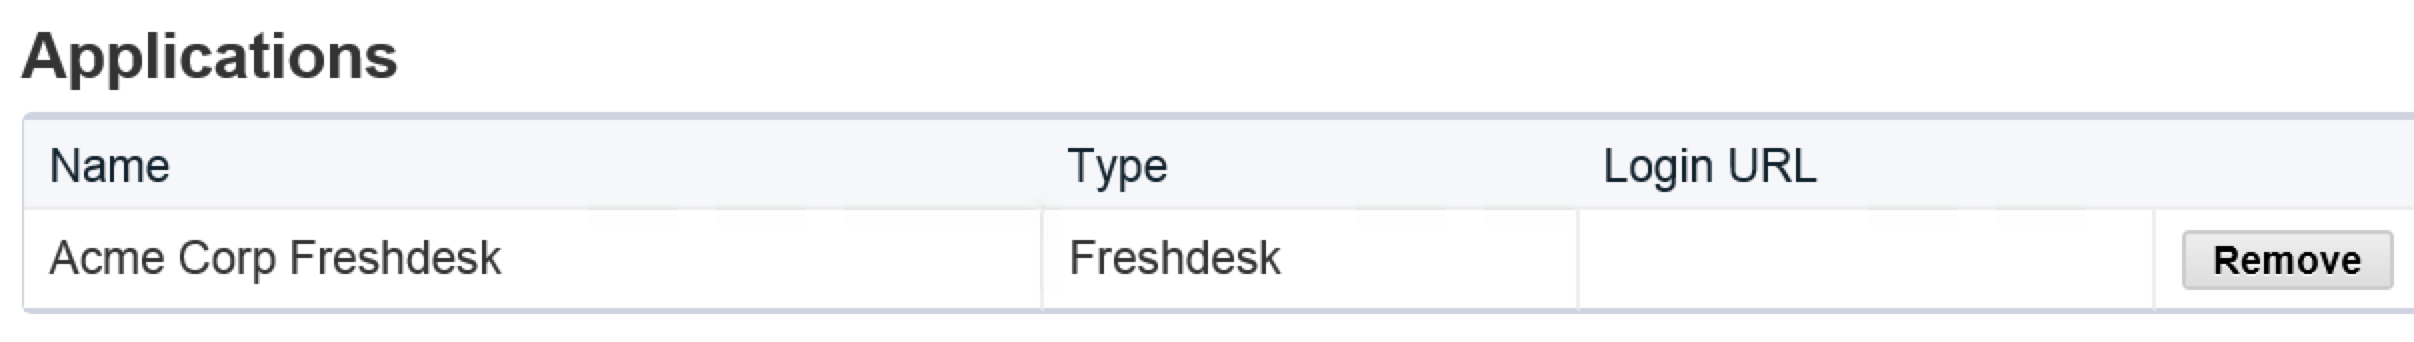 Freshdesk Application Added